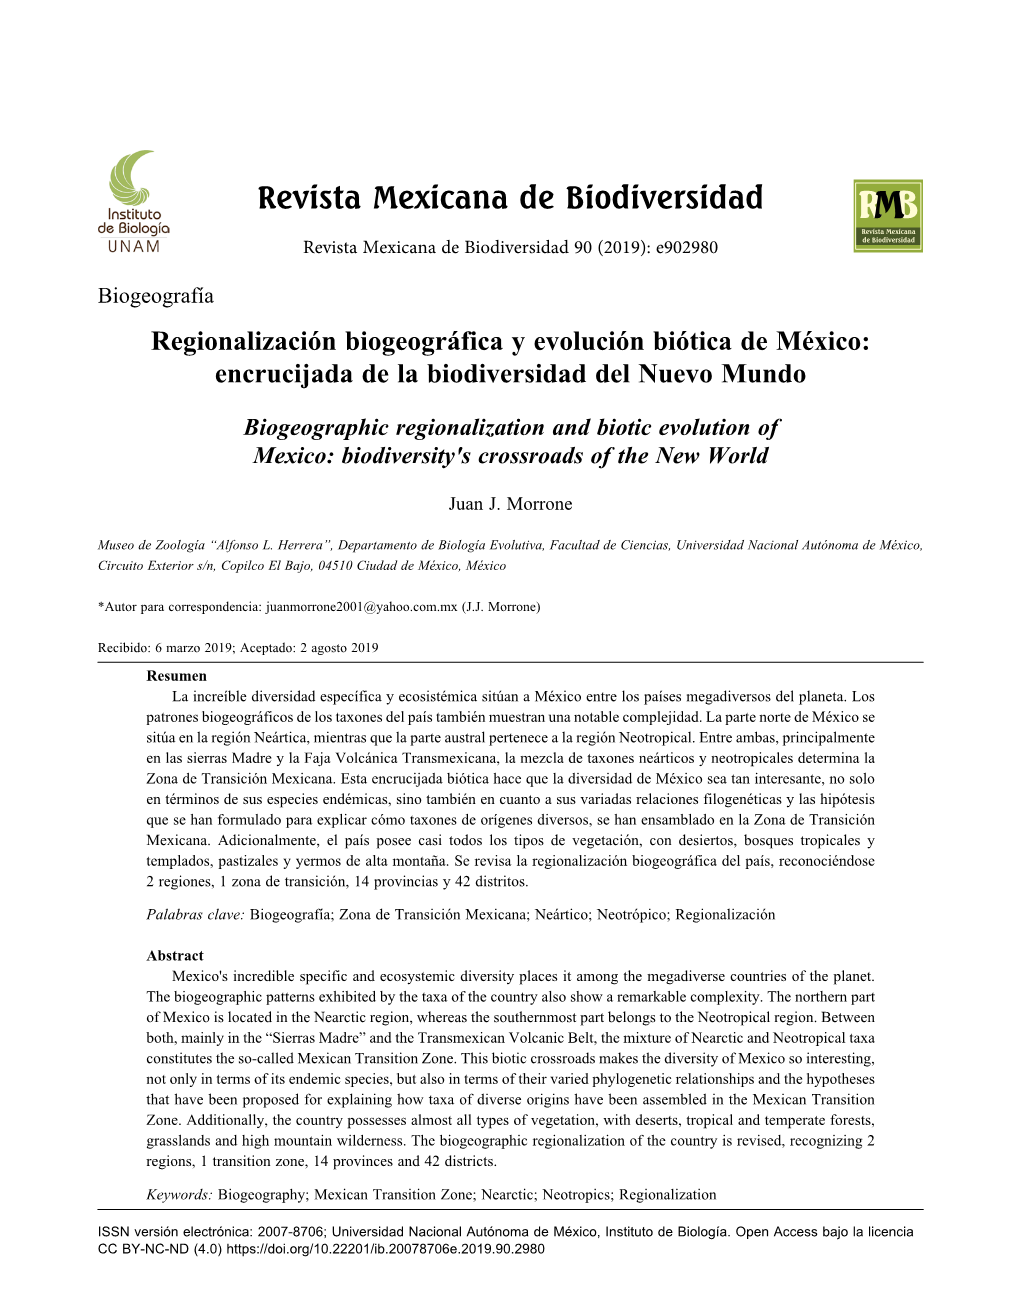 Biogeographic Regionalization and Biotic Evolution of Mexico: Biodiversity's Crossroads of the New World